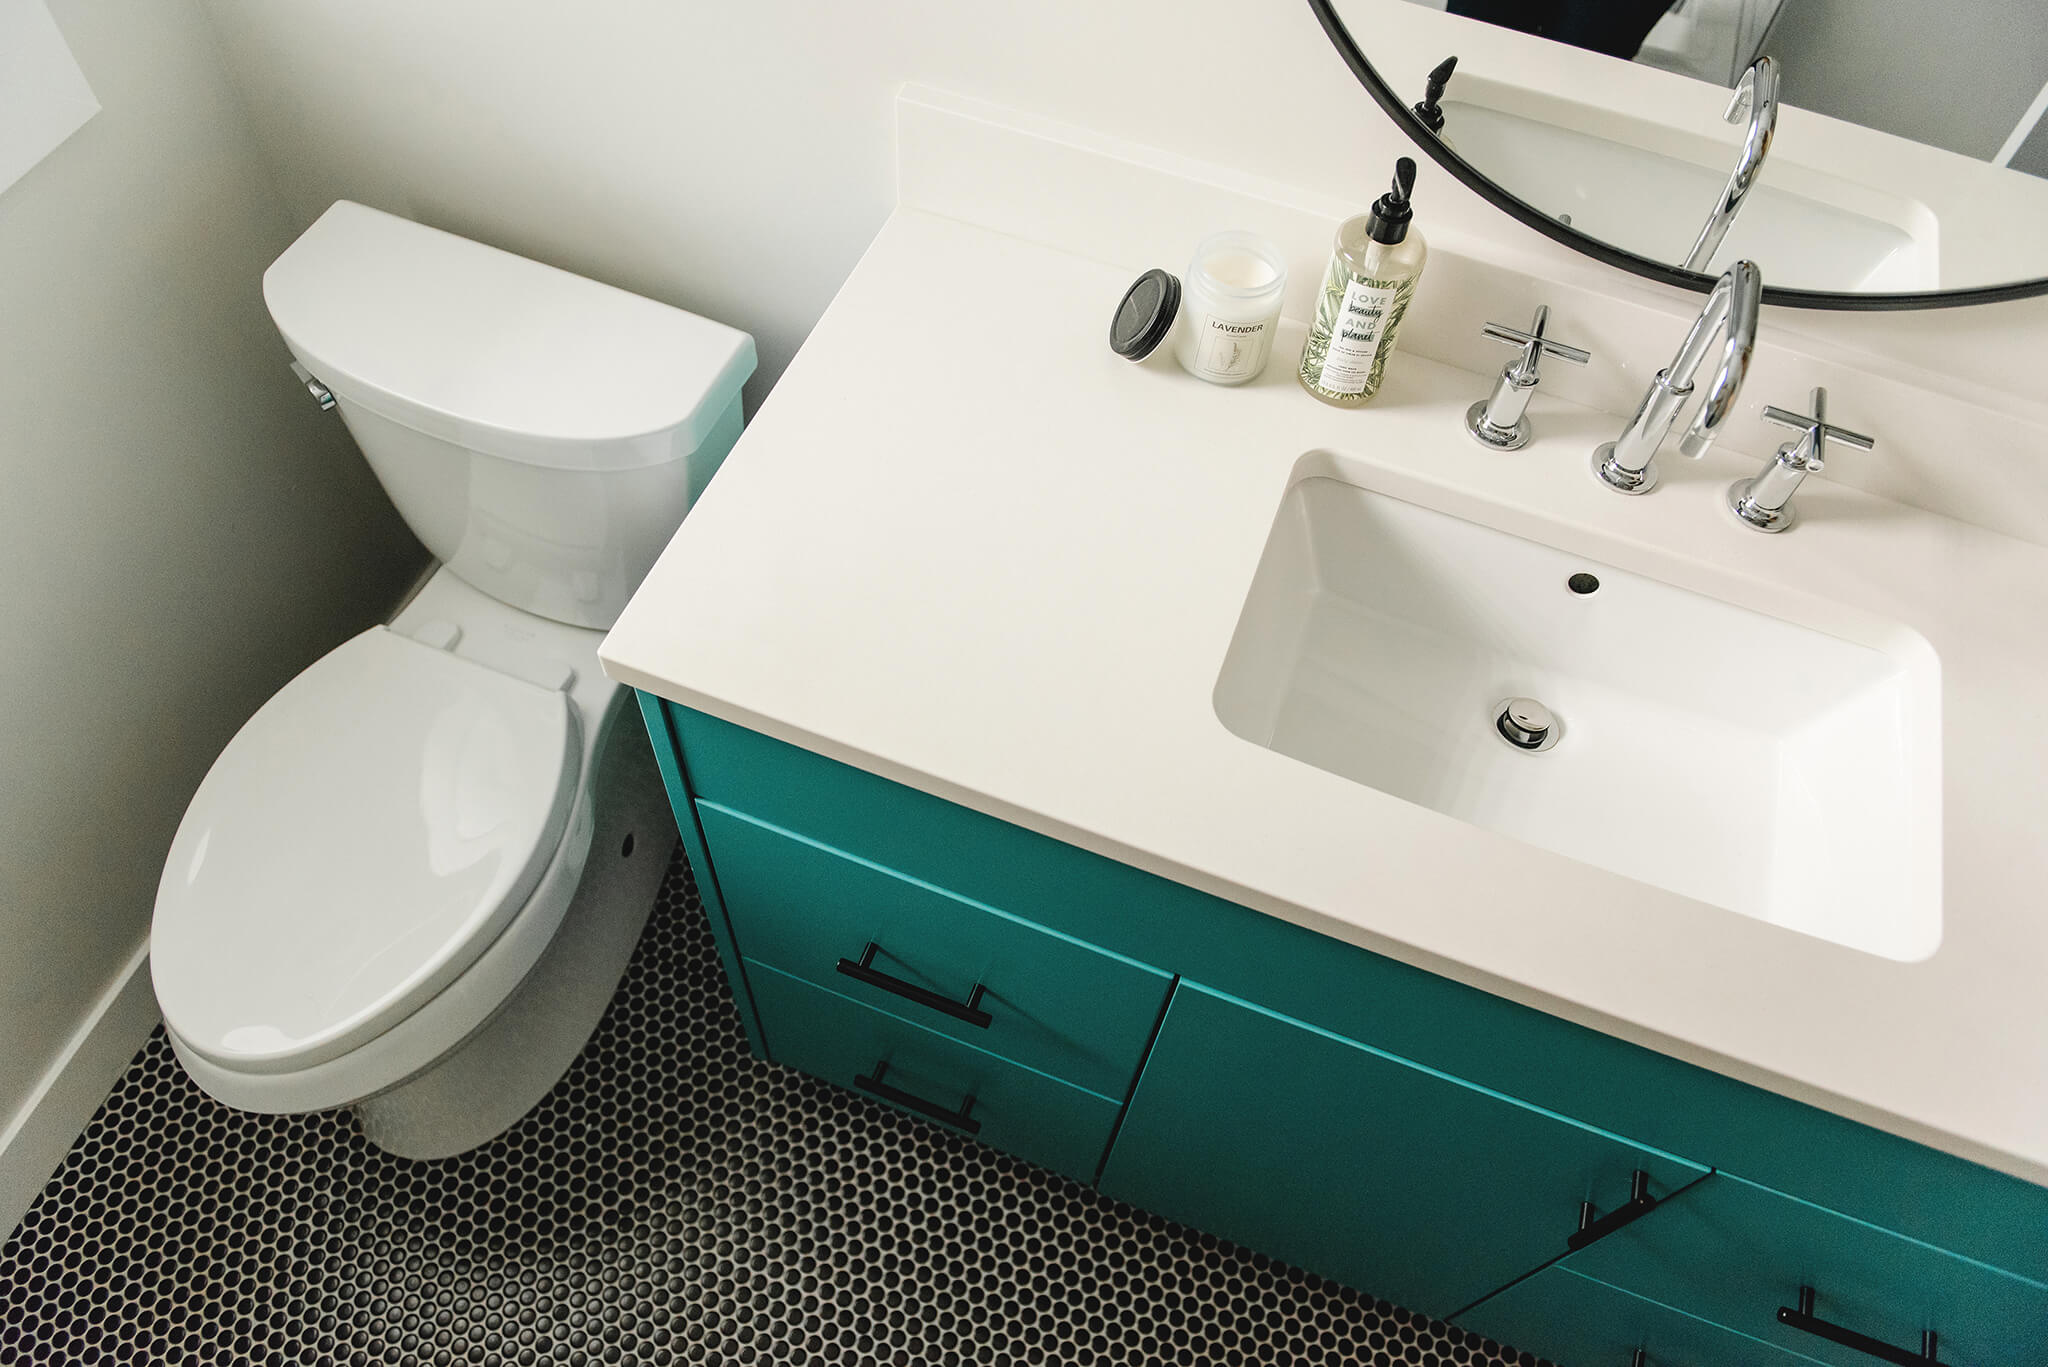 Teal mid-century modern bathroom vanity with black penny tile floor and white countertop